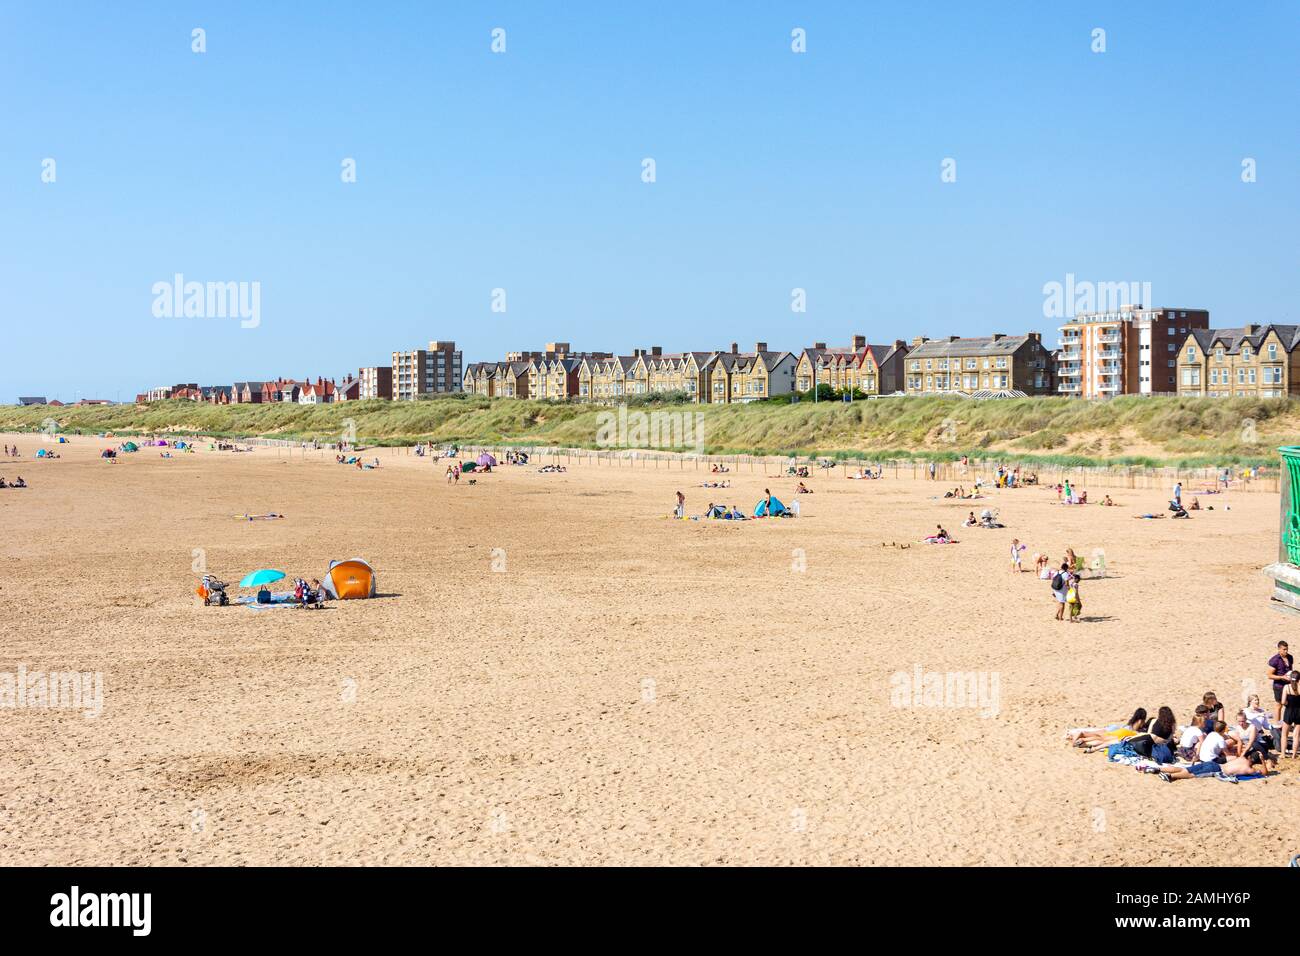 St Anne's Beach from Pier, Lytham St Annes, Lancashire, England, United Kingdom Stock Photo